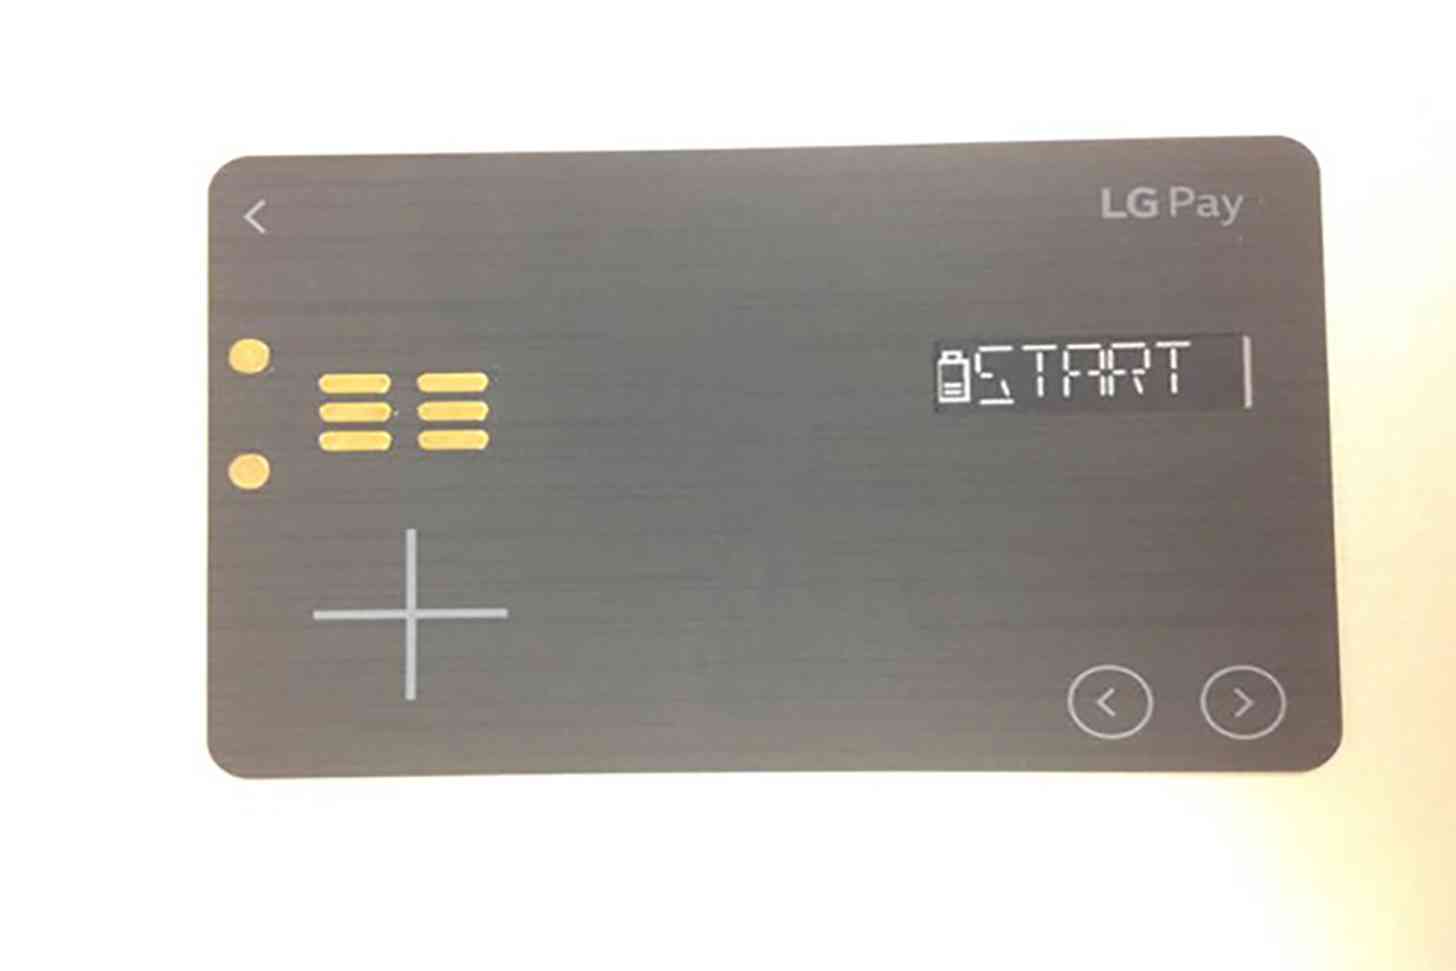 LG Pay White Card image leak